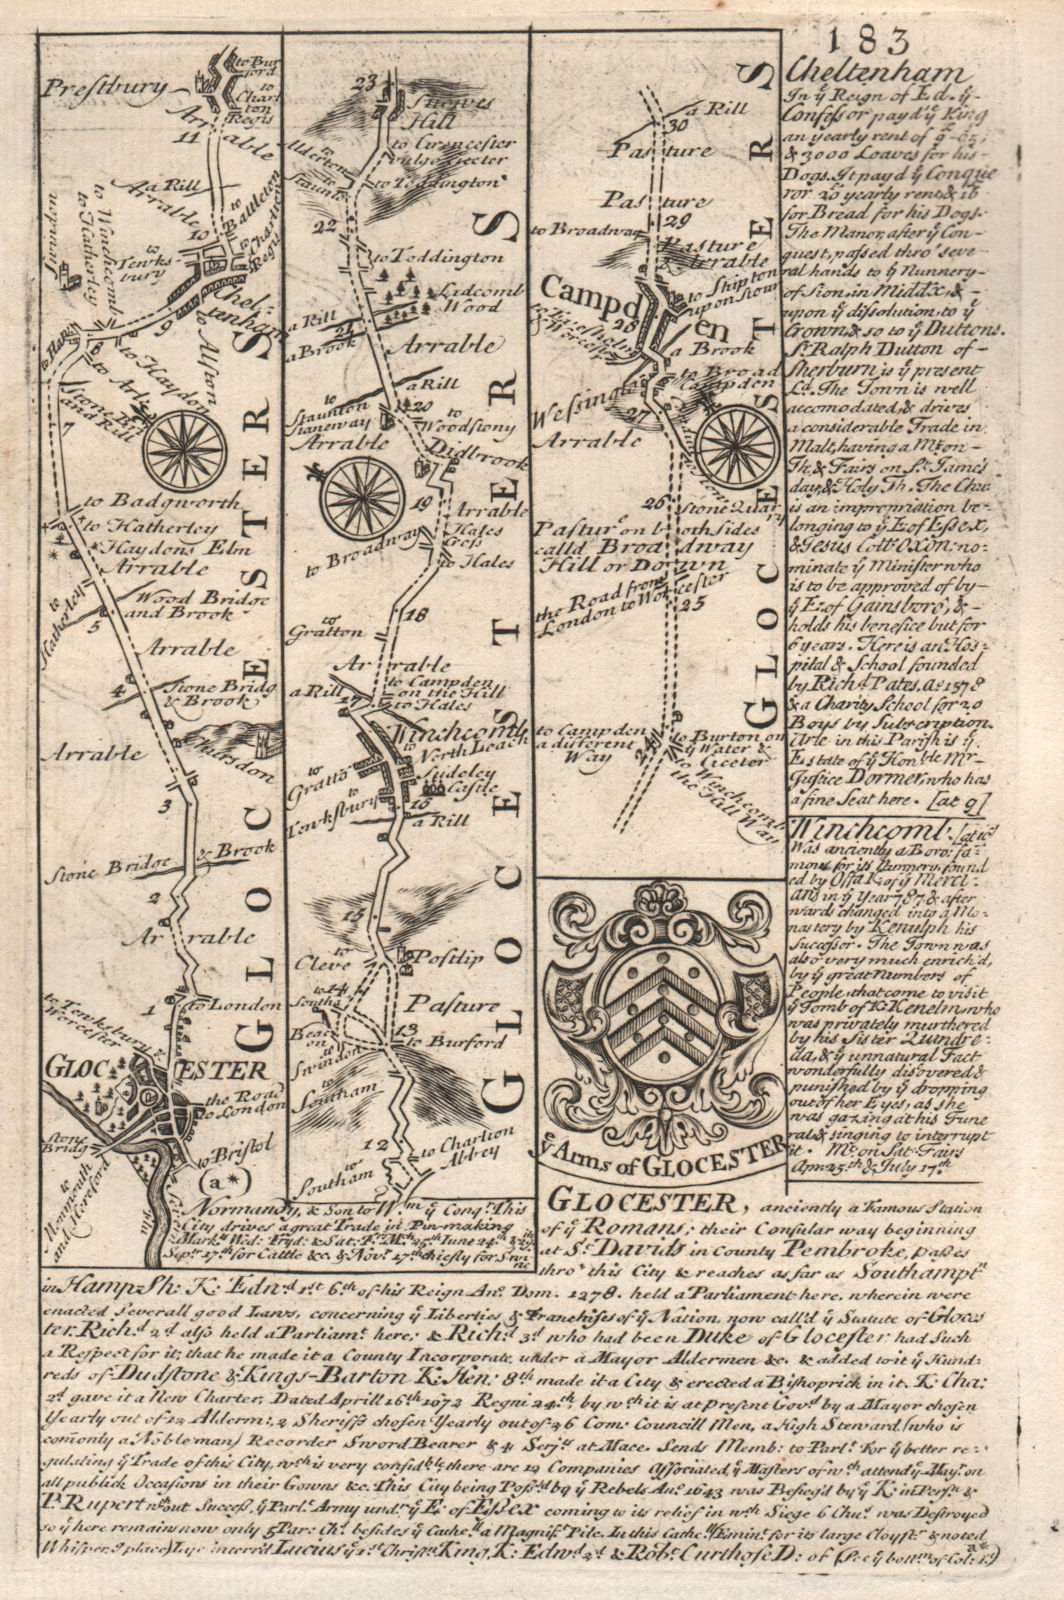 Gloucester-Cheltenham-Winchcombe-Chipping Campden road map by OWEN & BOWEN 1753